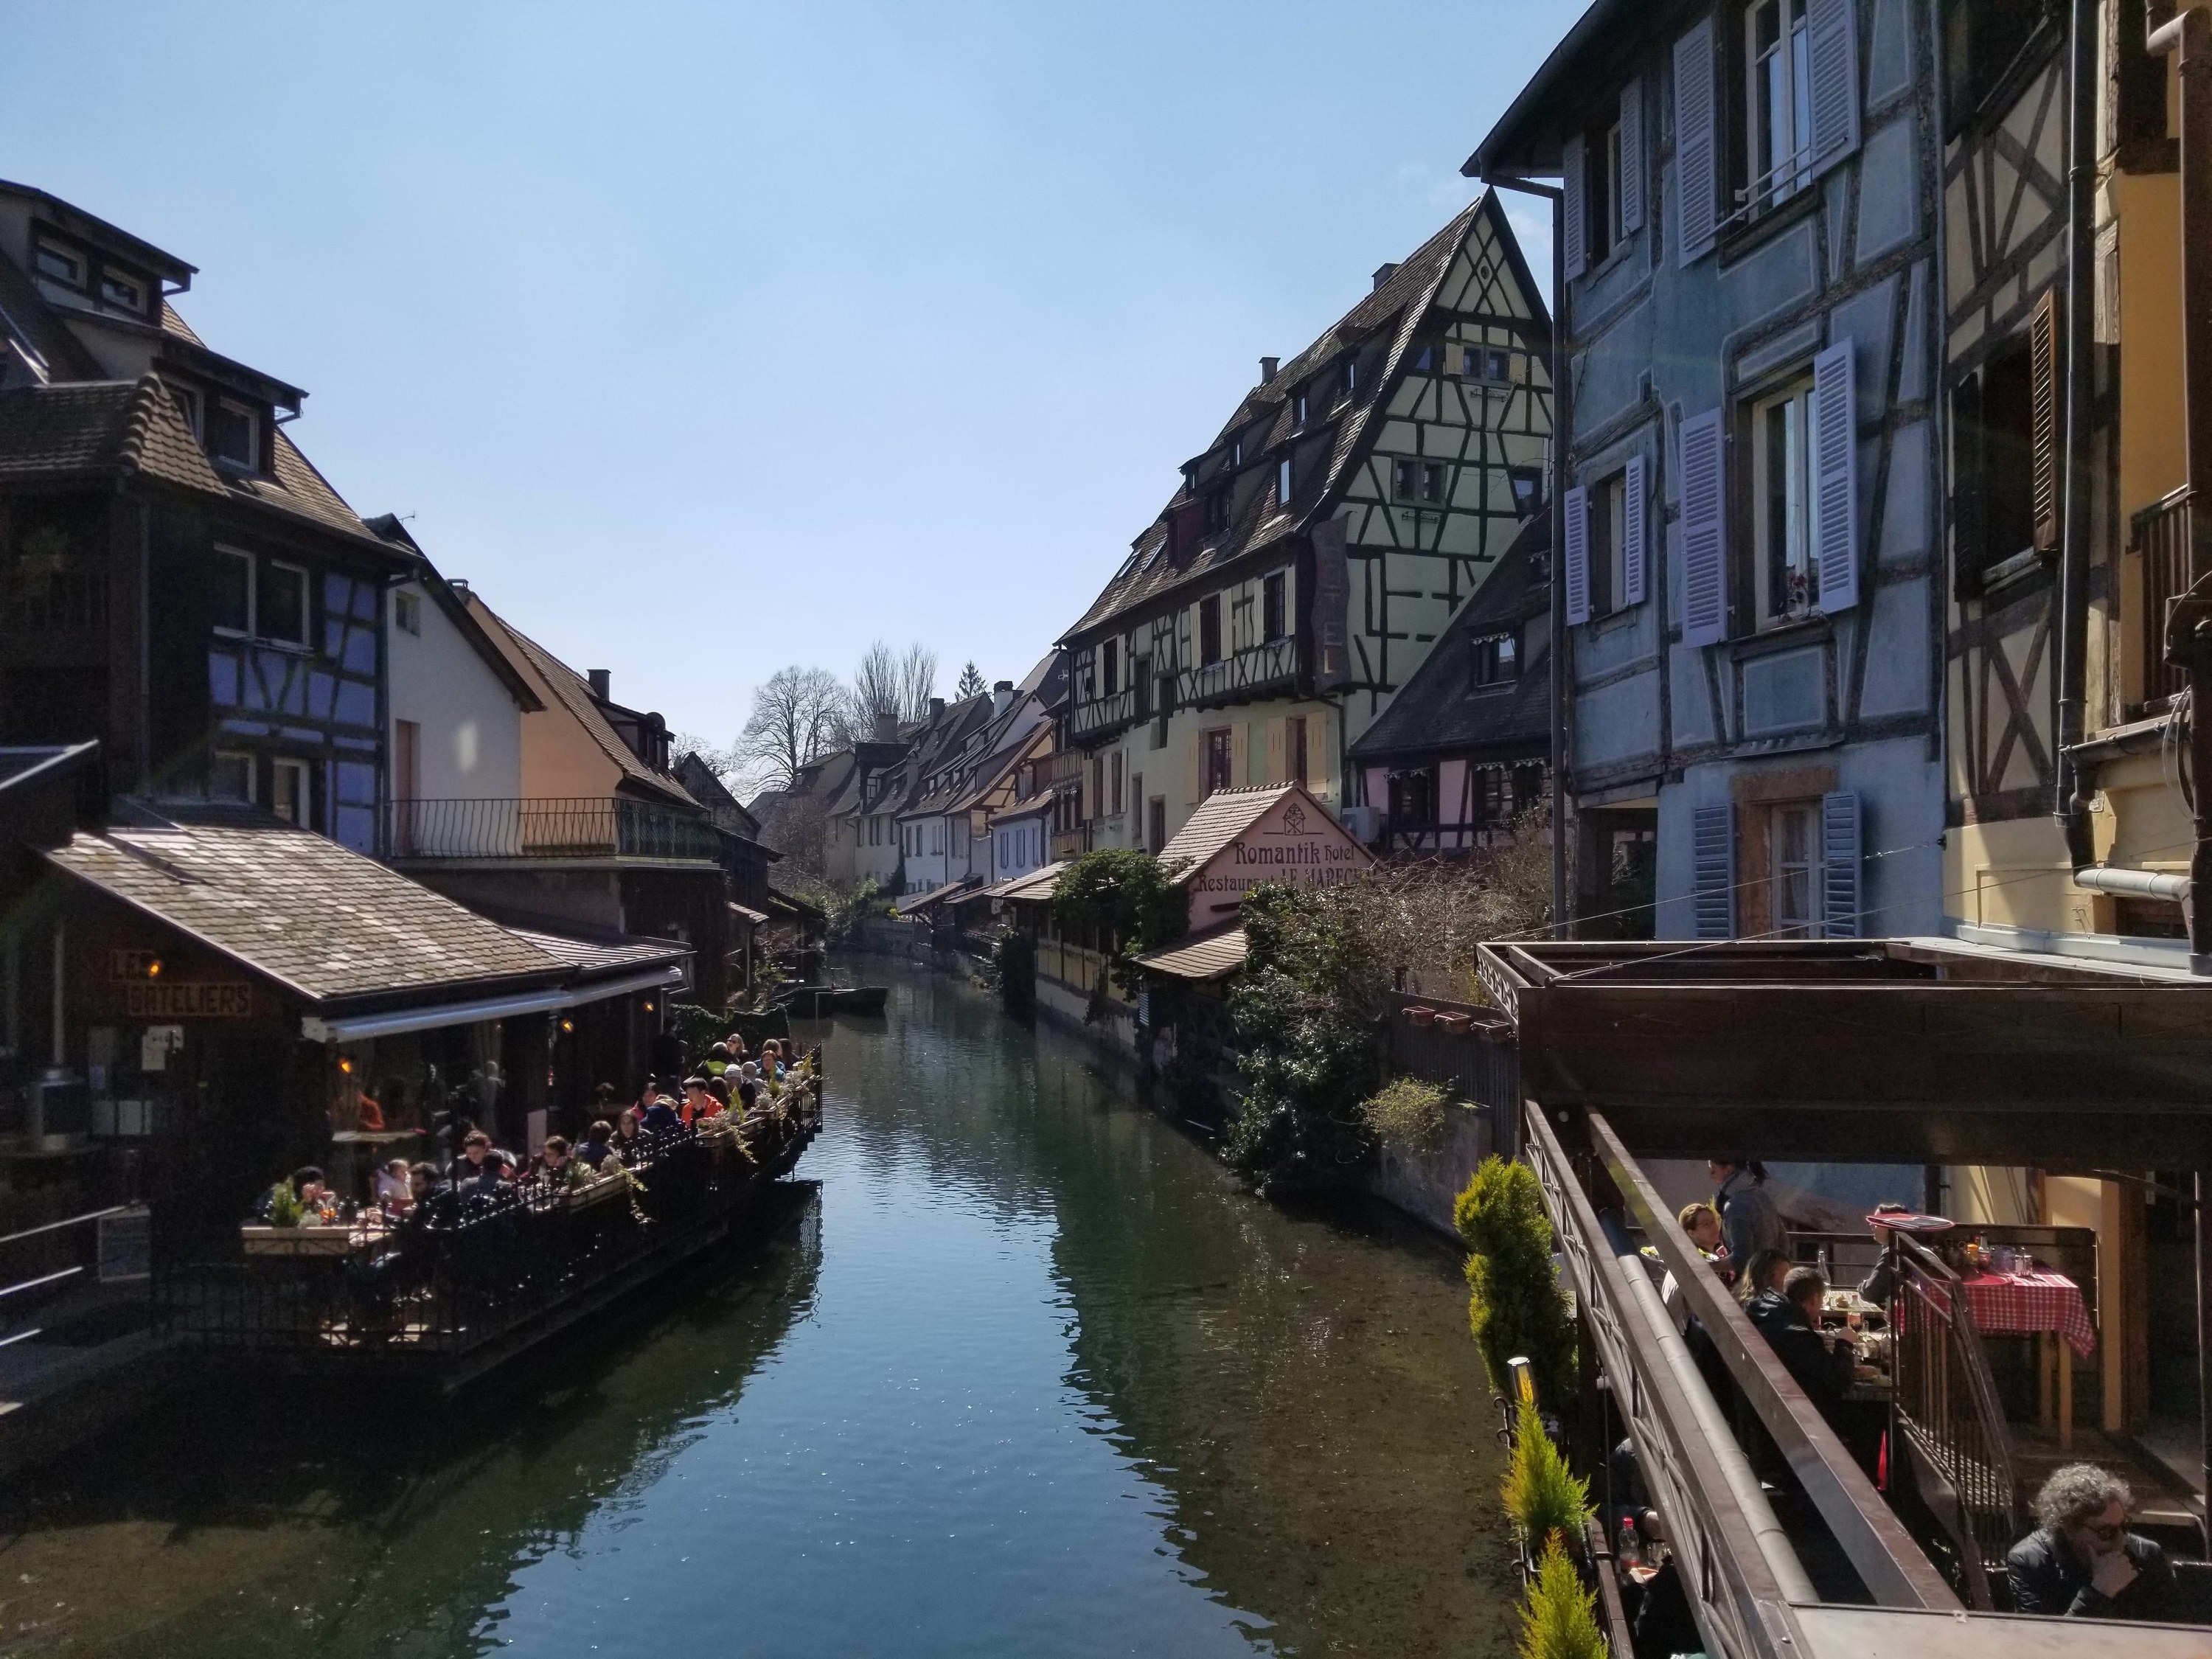 Restaurants alongside a canal through a picturesque Colmar